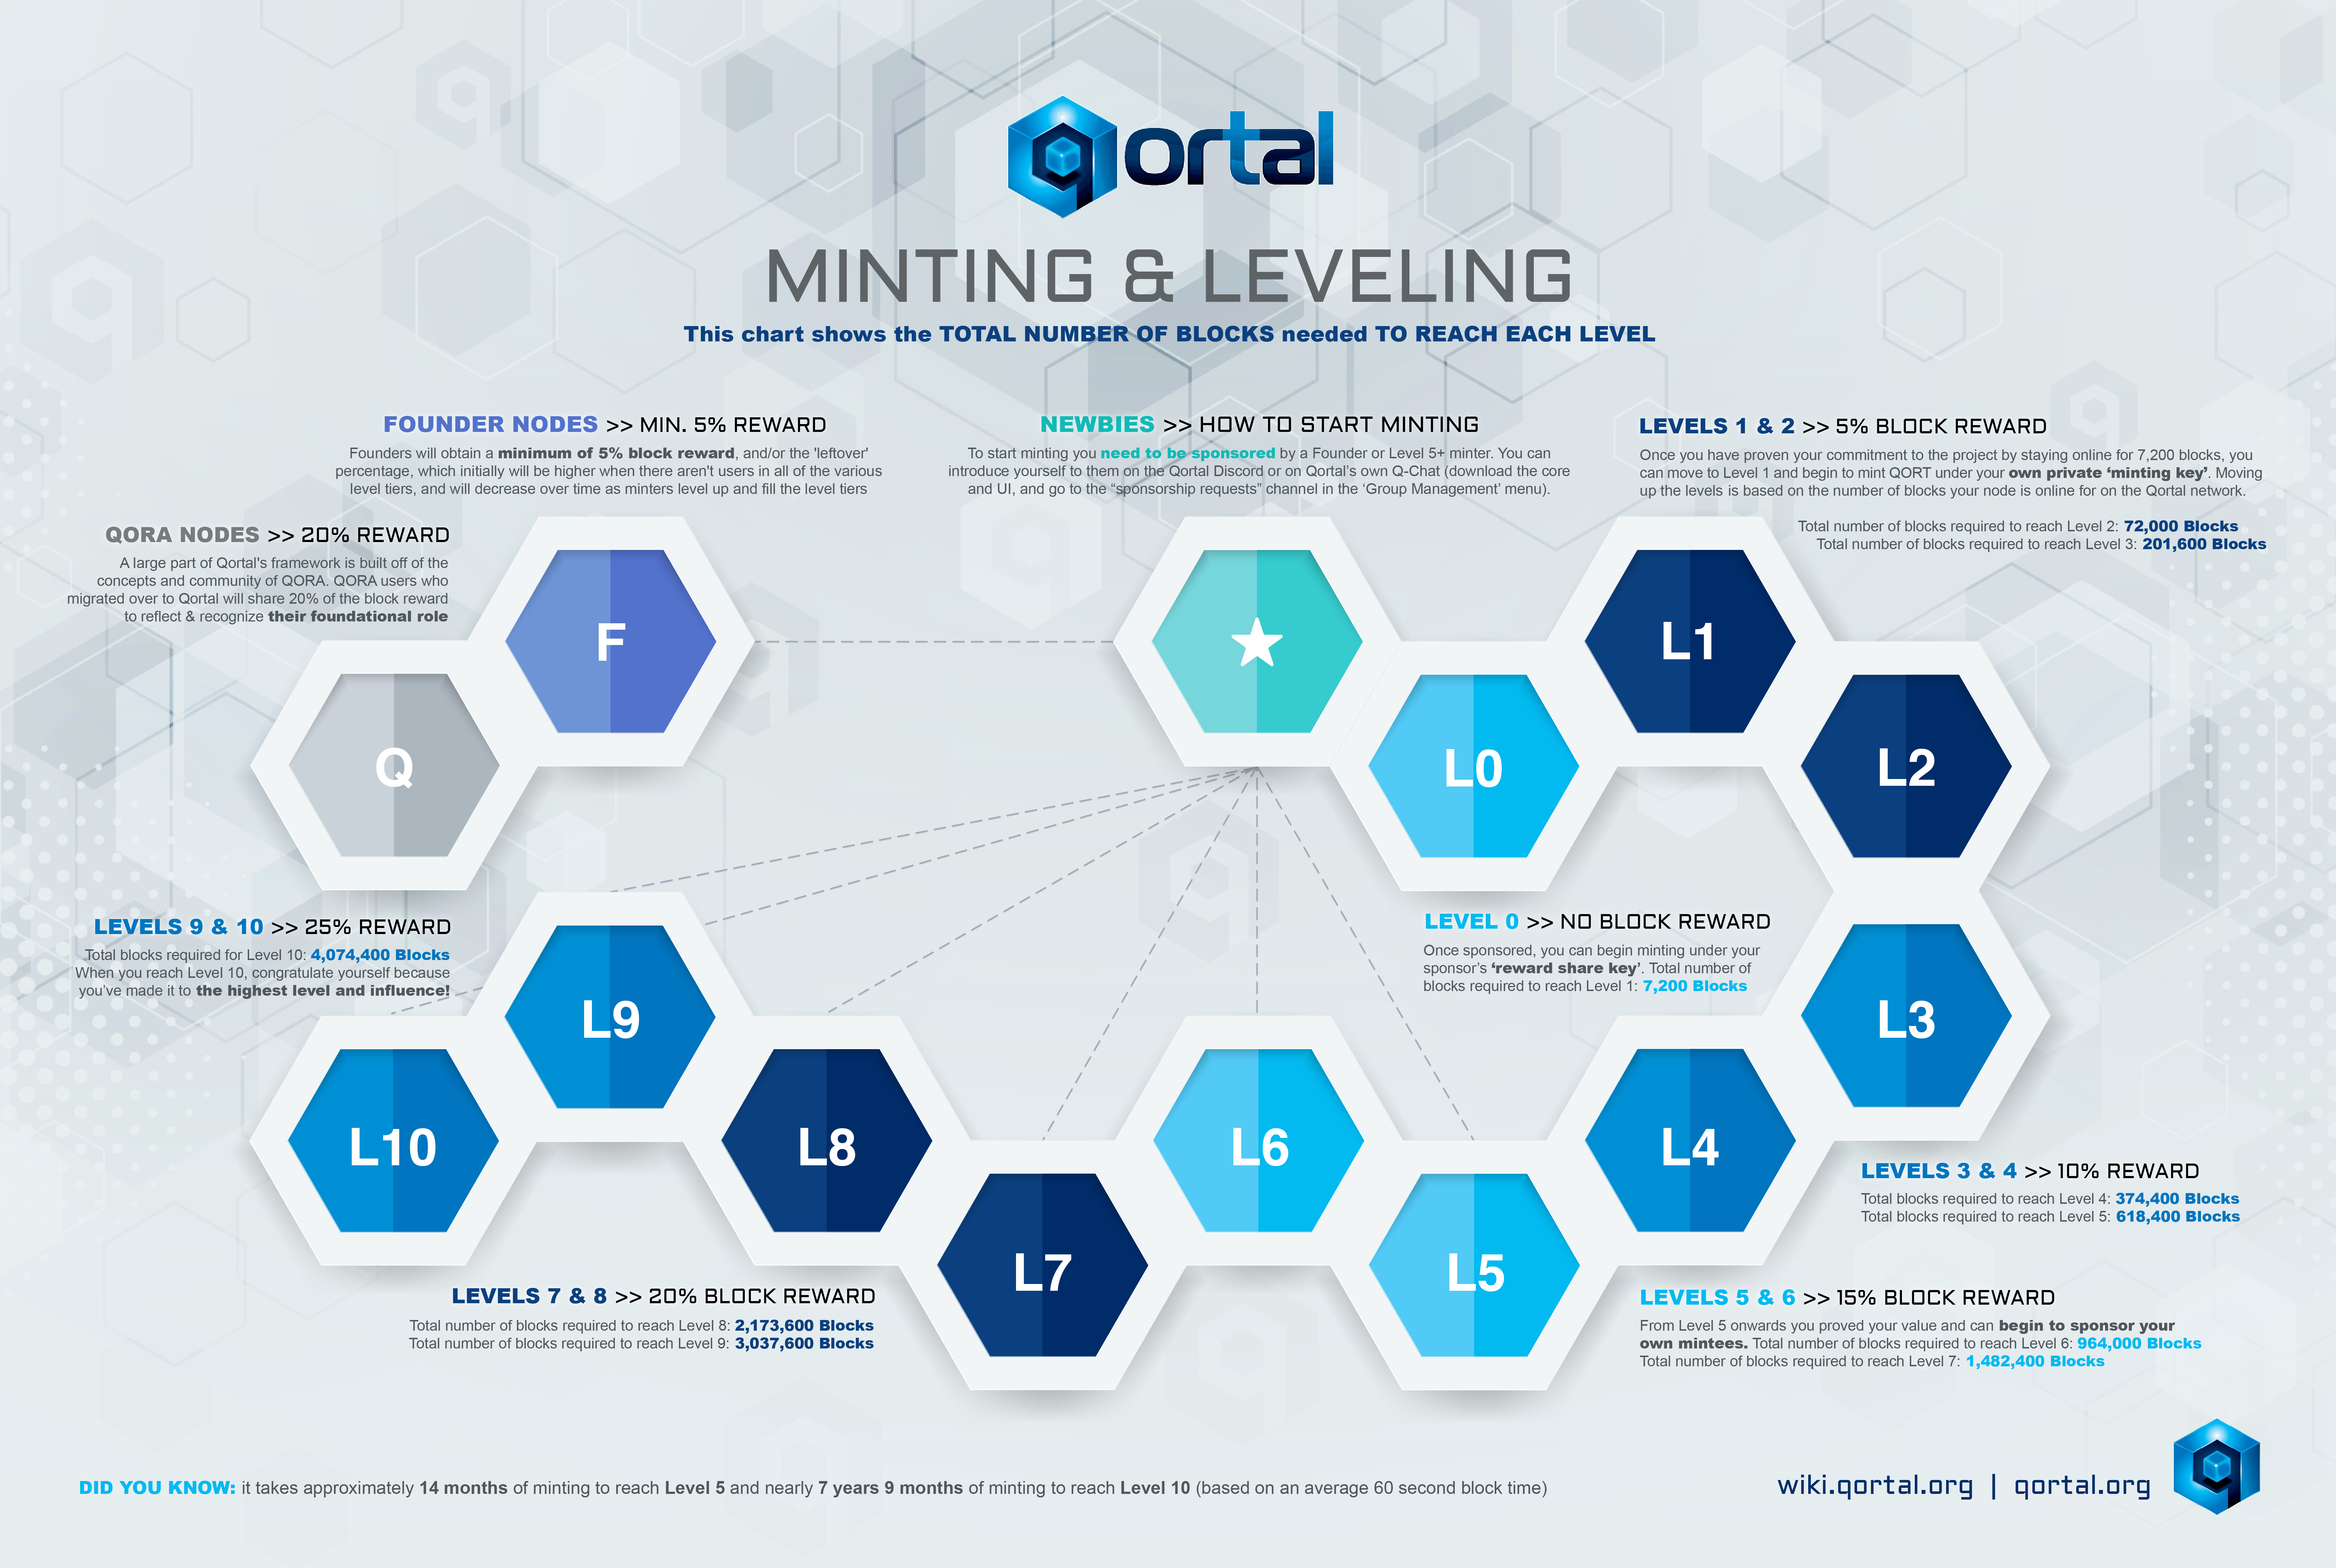 Qortal_minting_and_leveling_2020_V11_B_grey tint